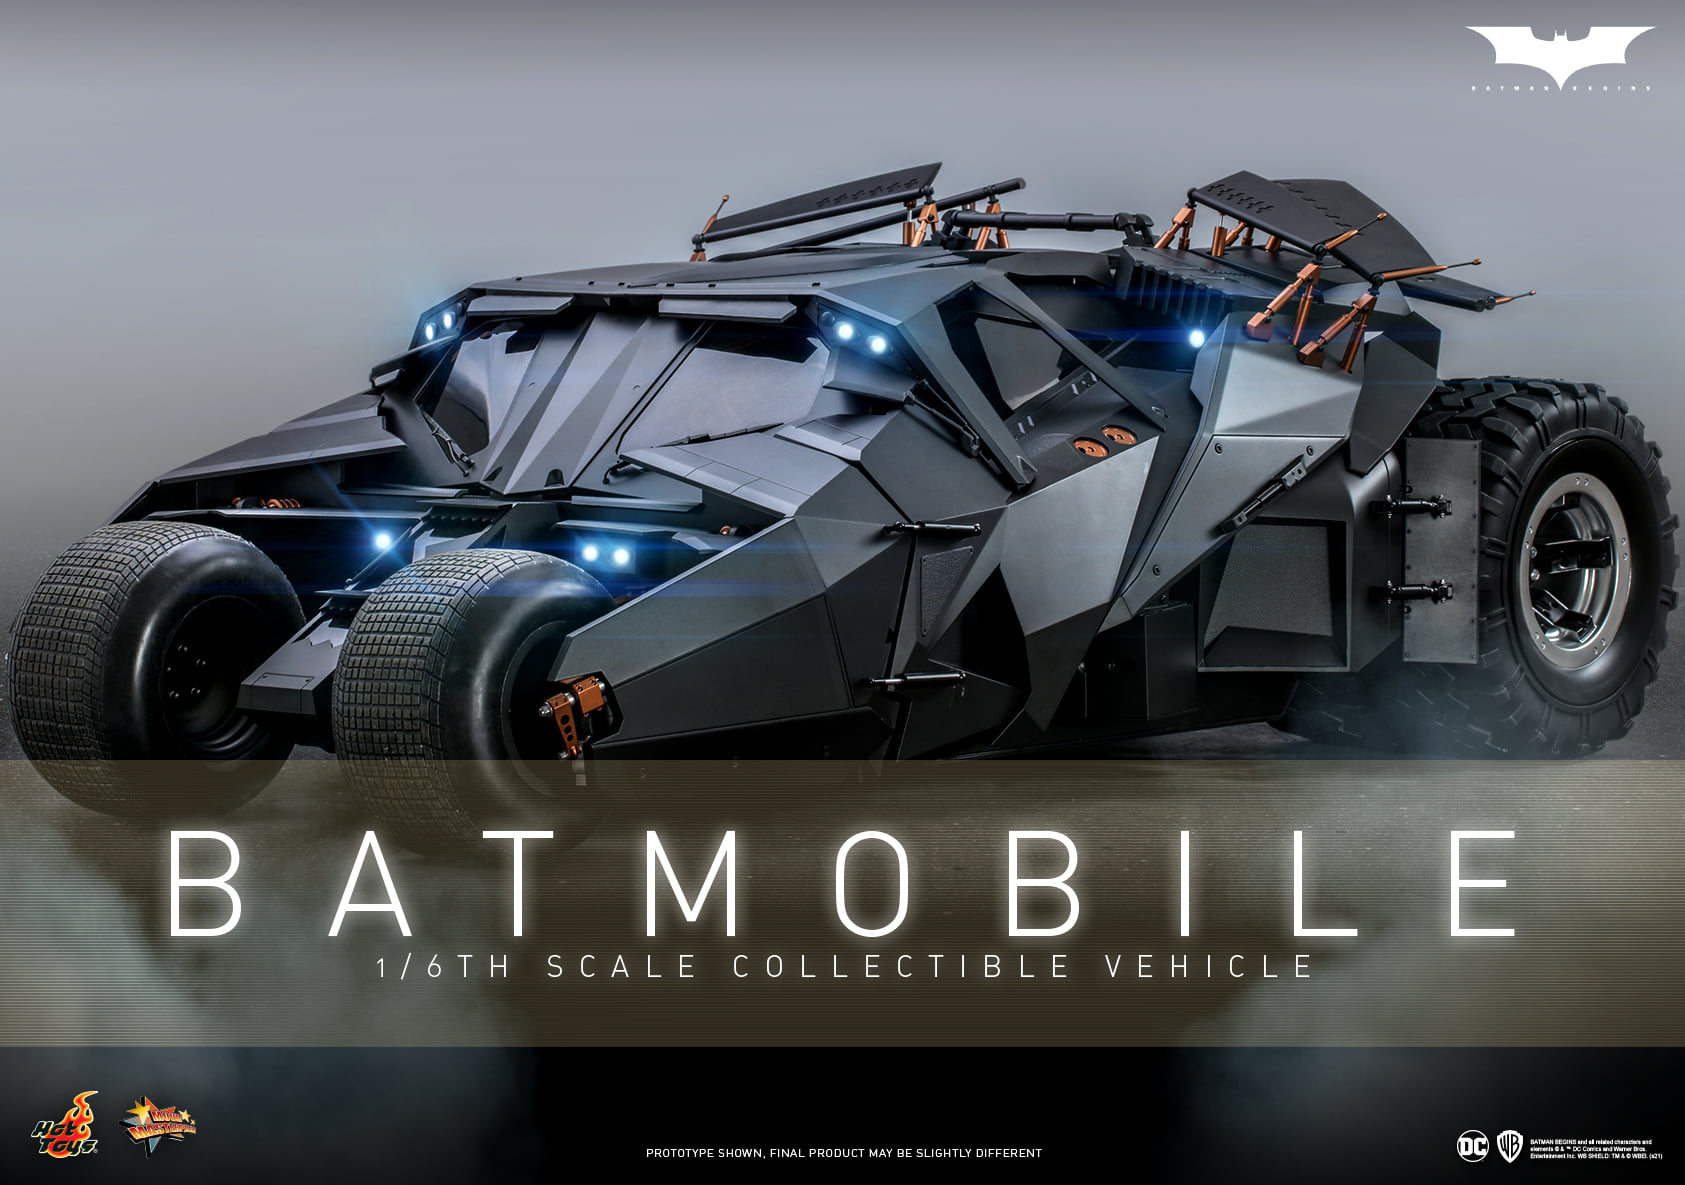 Hot Toys DC Comics Batman Begins Batmobile Sixth Scale Vehicle MMS596